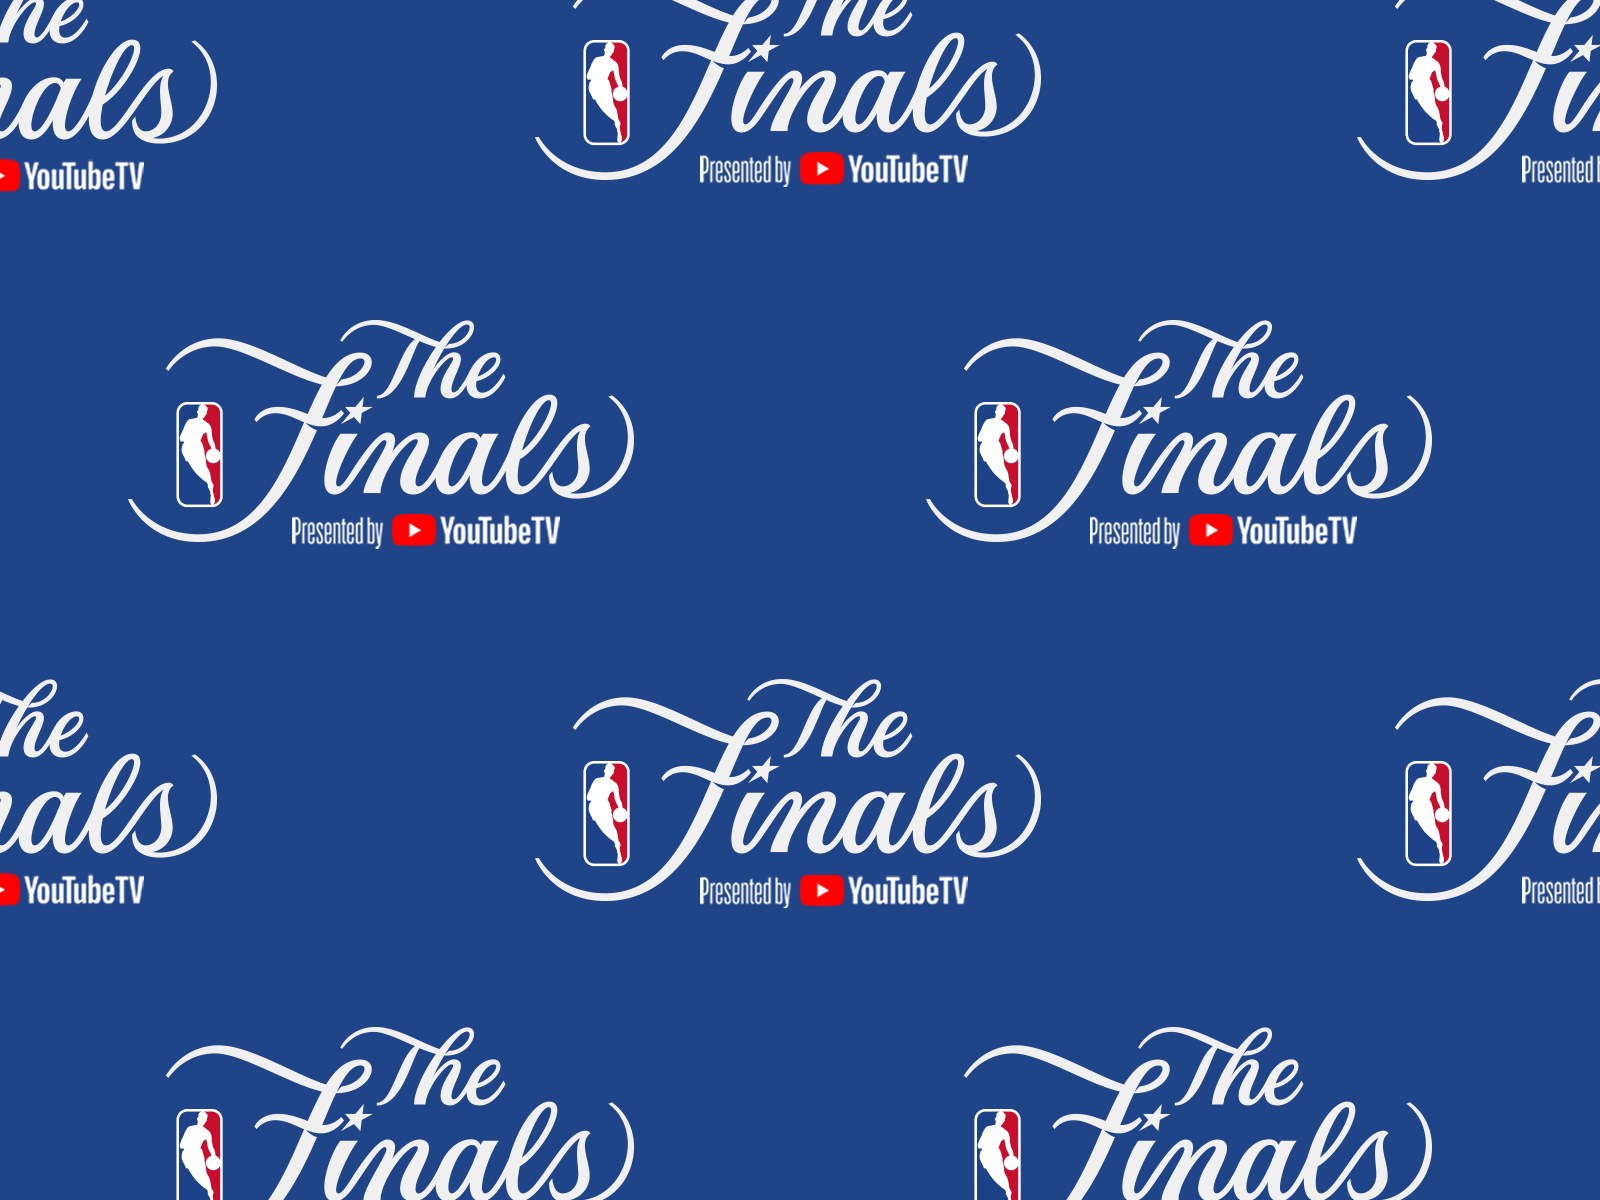 NBA Finals brings back script typeface in logo design - NewscastStudio